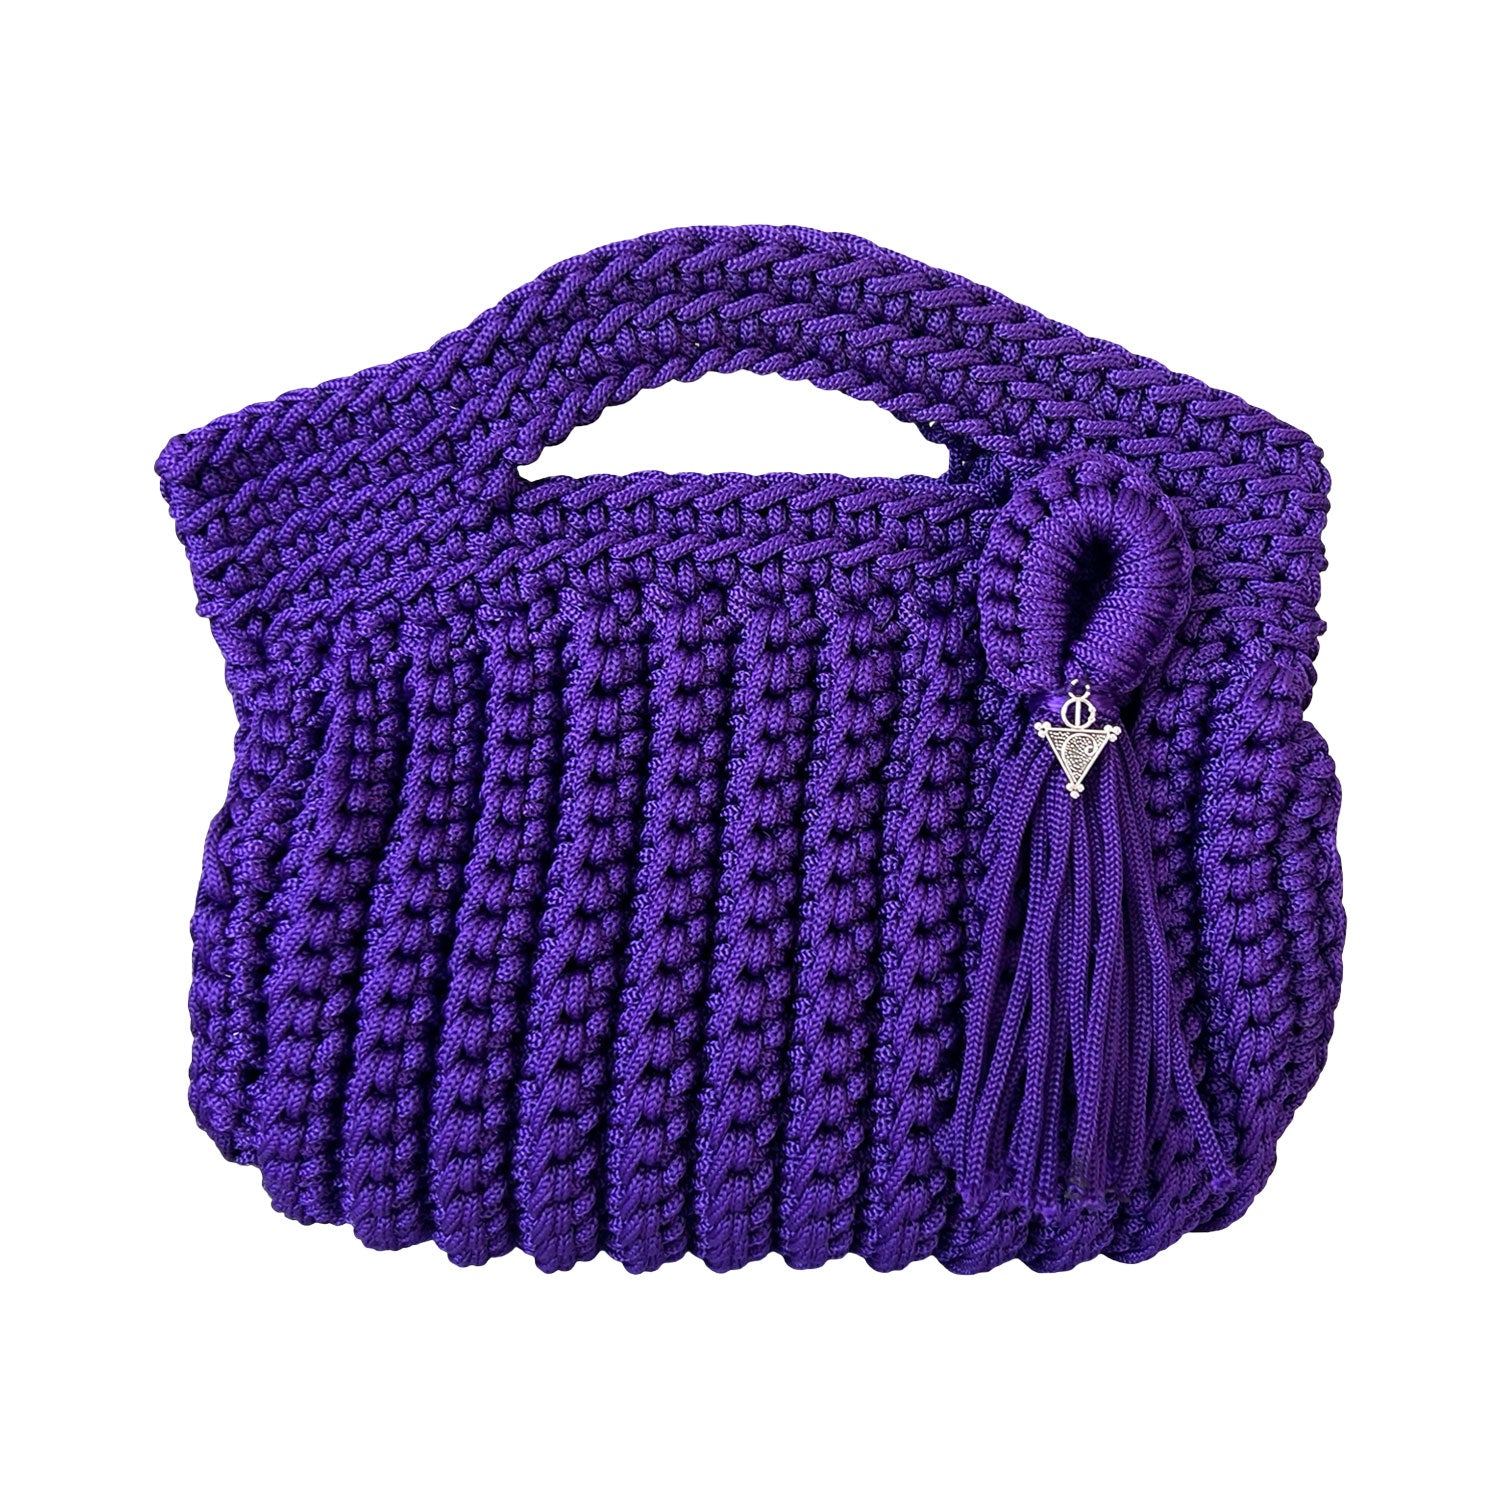 Mini Crocheted Handbag in Purple